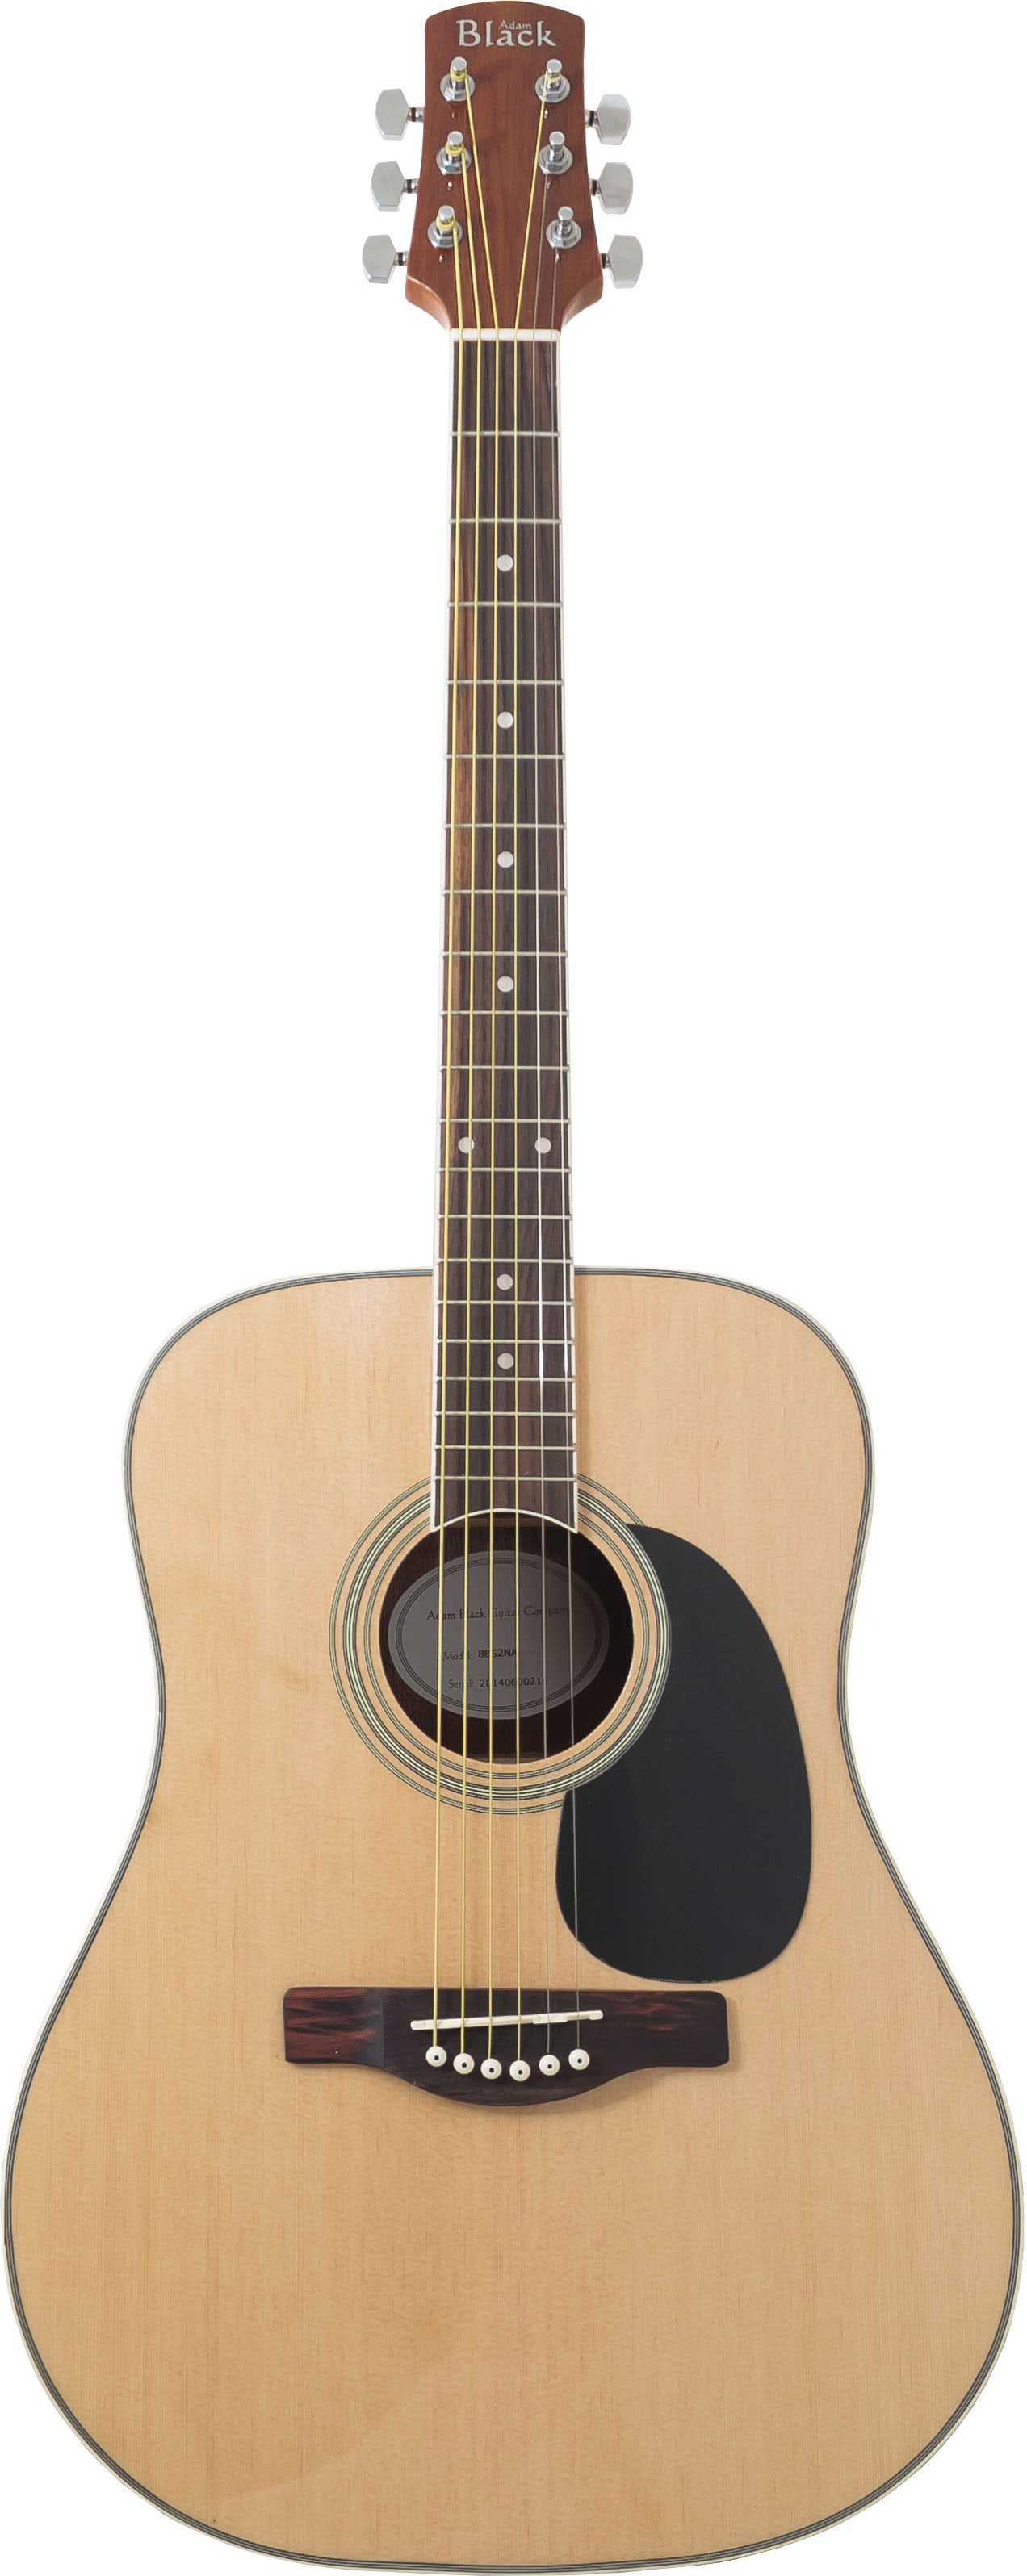 Adam Black S2 Natural Dreadnought Acoustic Guitar: 88S2NA